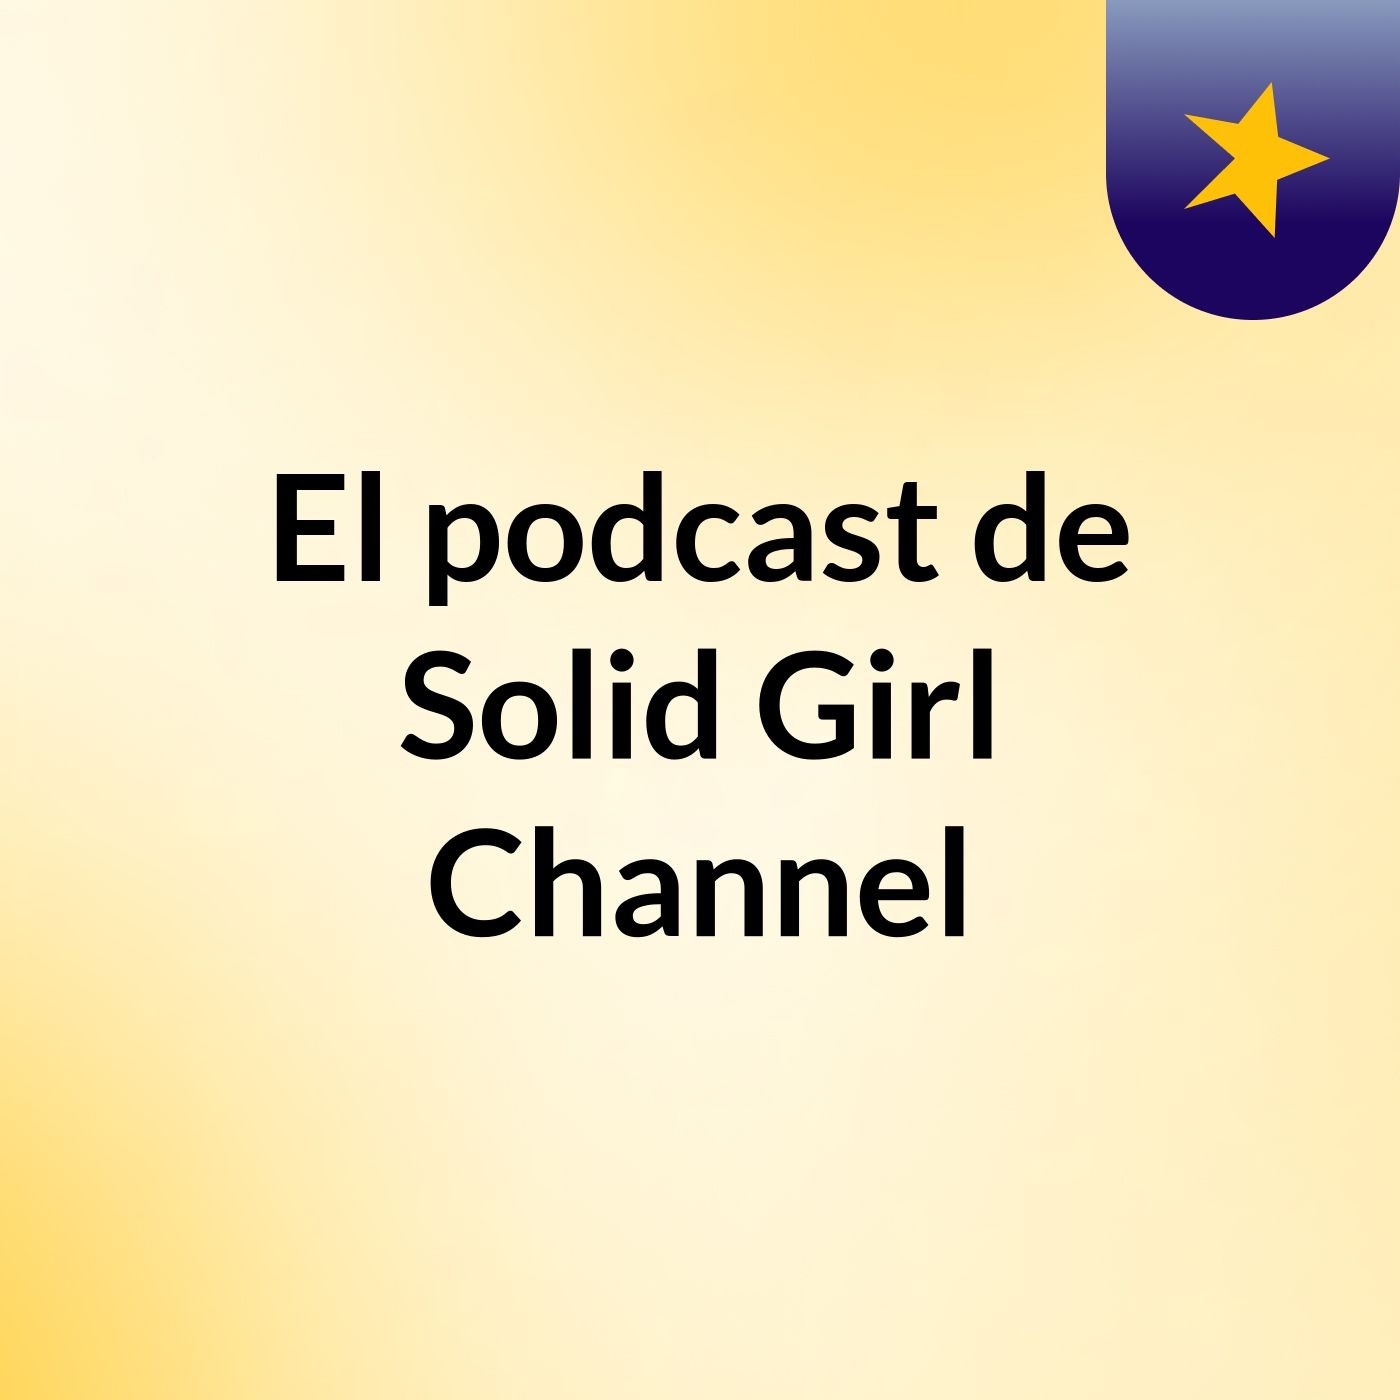 El podcast de Solid Girl Channel